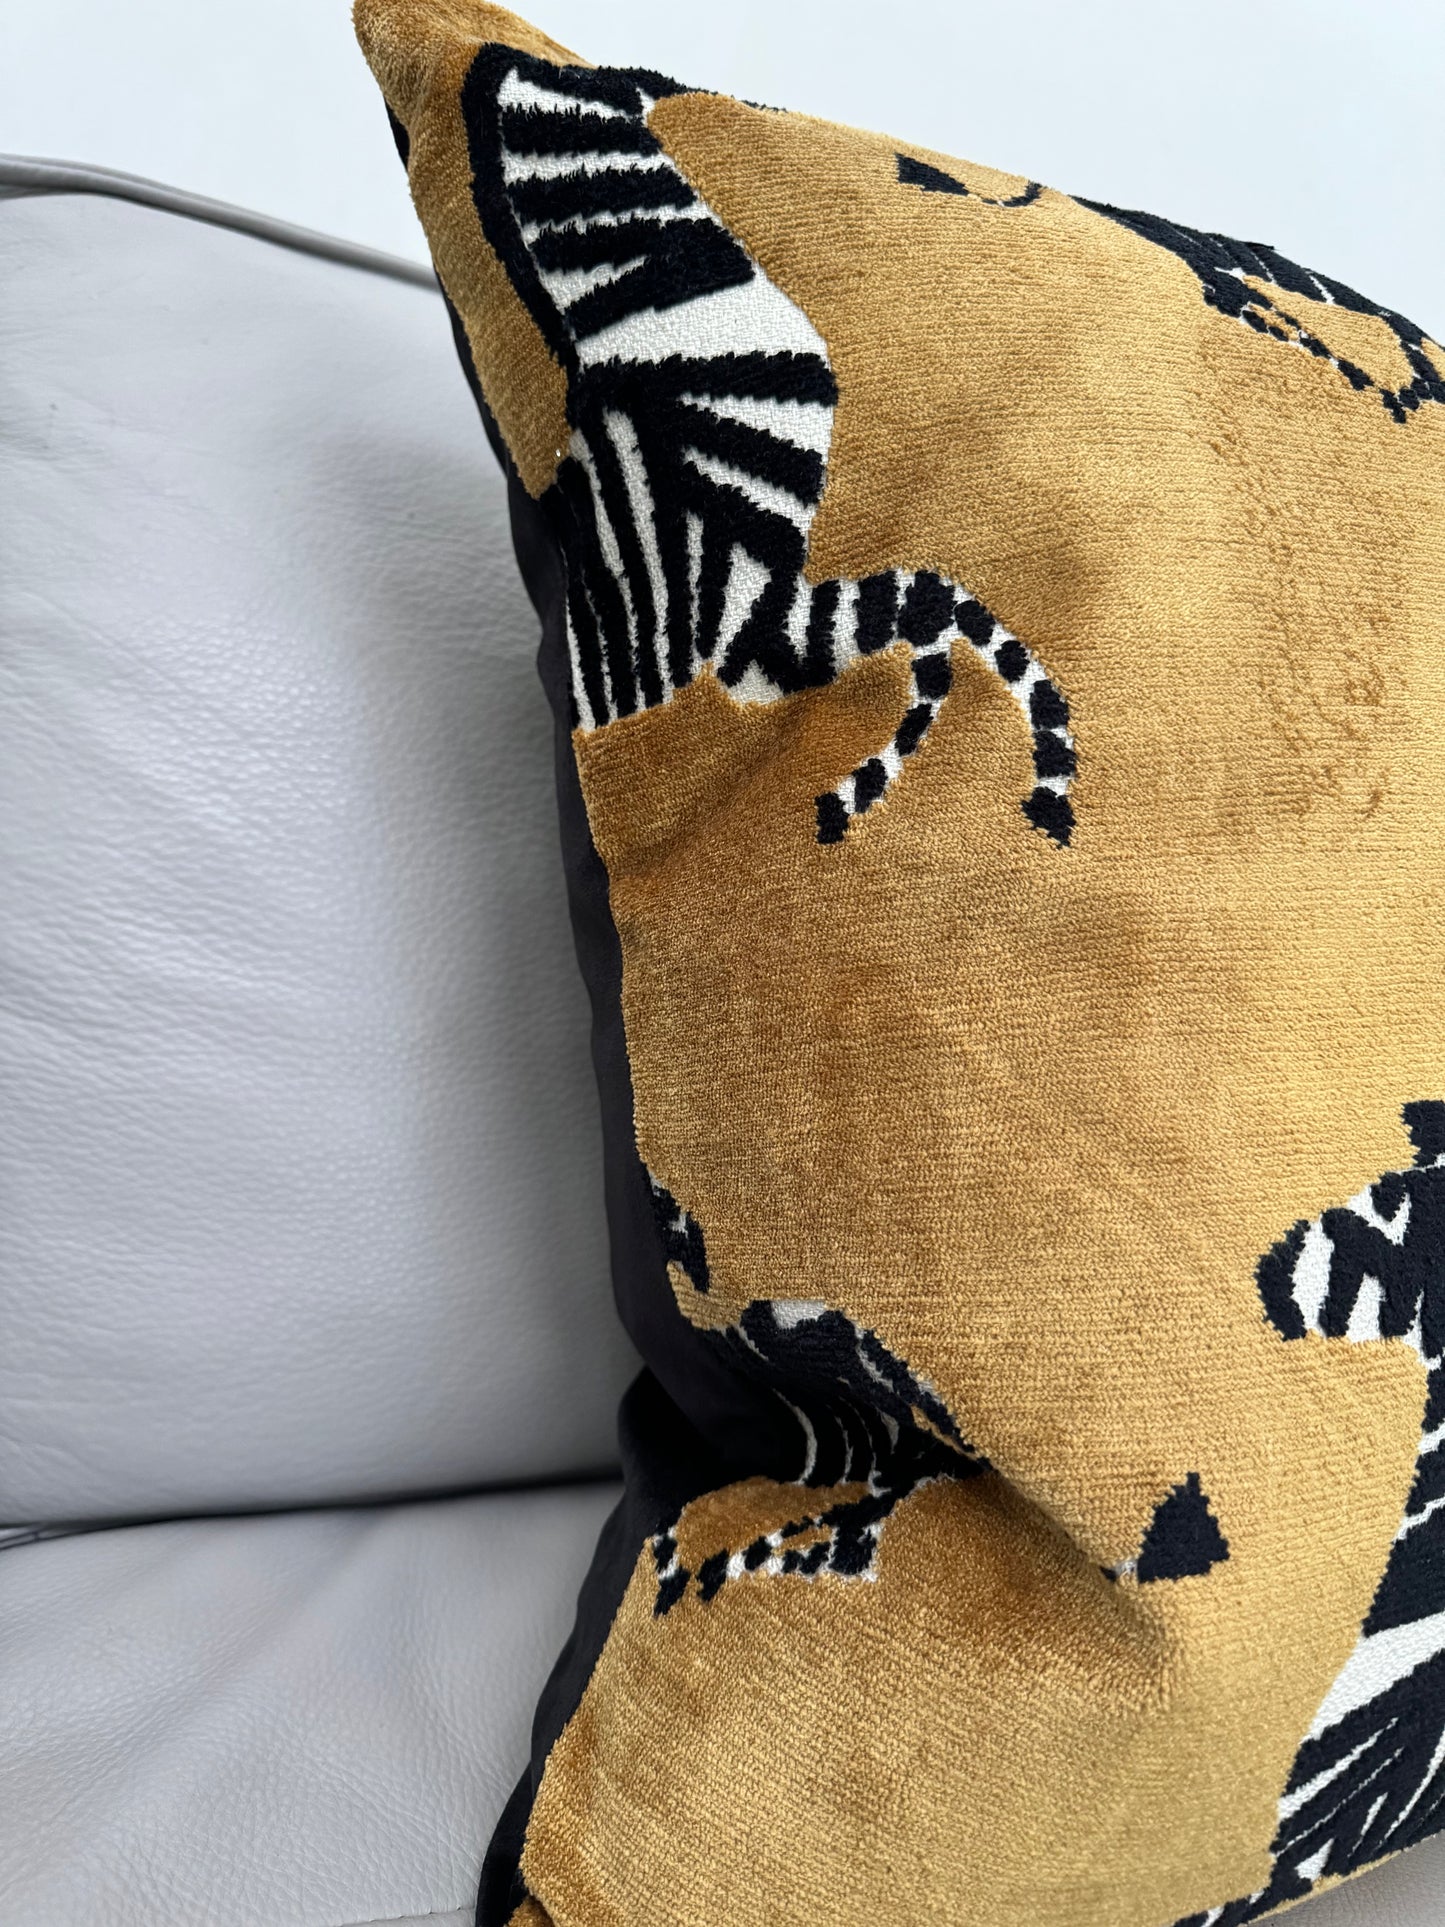 Pacific Coast Austin Horn 22x22 Kona Zebra Yellow Gold Black Decorative Pillow NWT